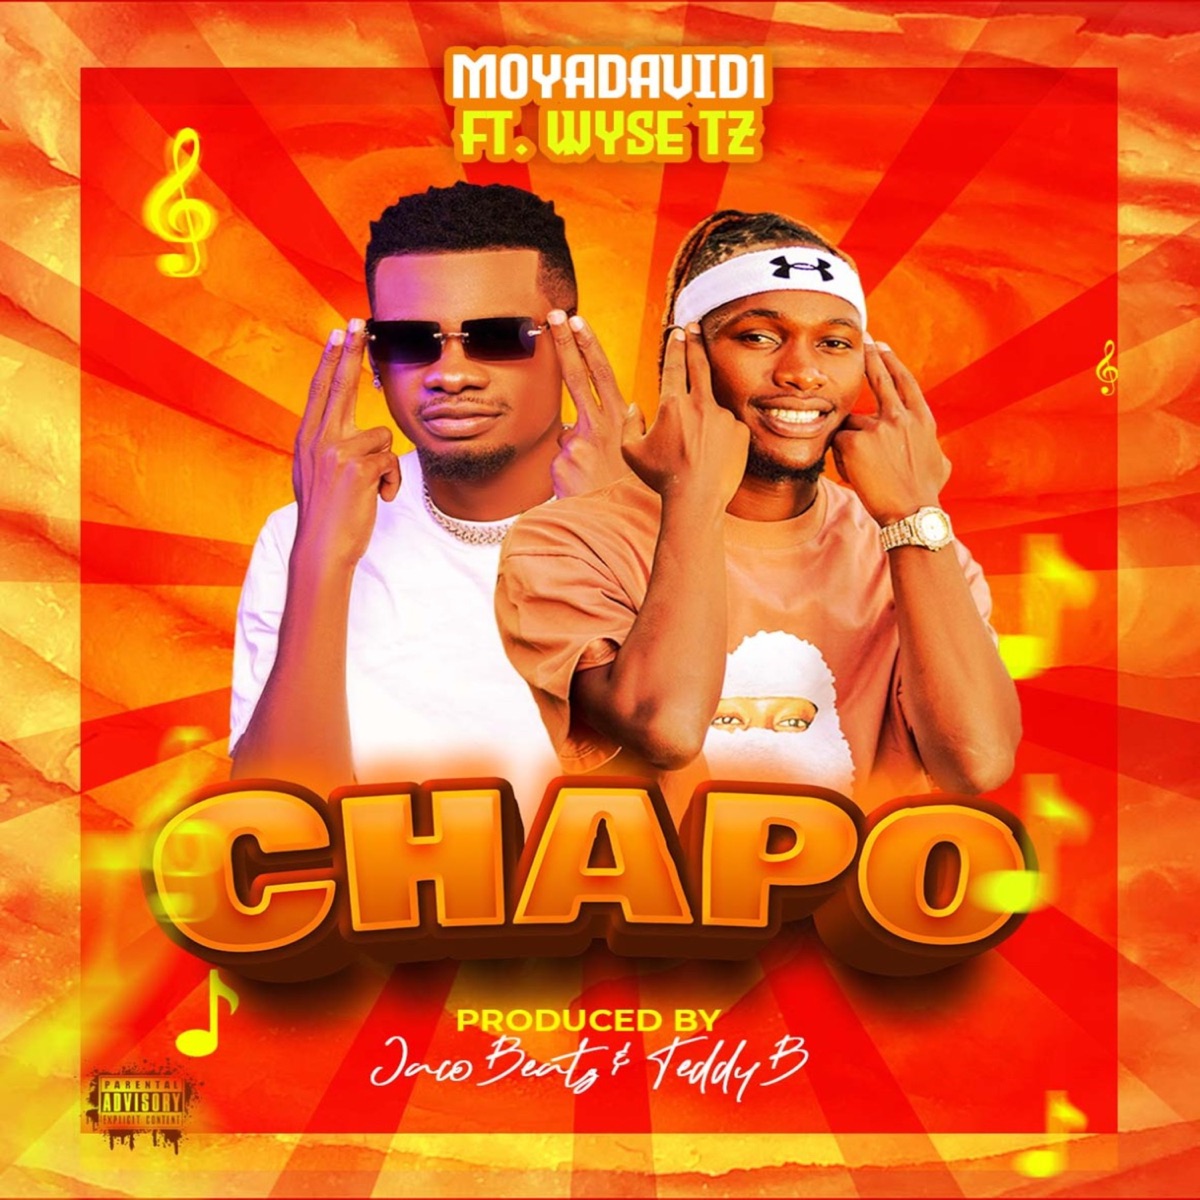 Chapo - Single by Moyadavid1 & Wyse Tz on Apple Music